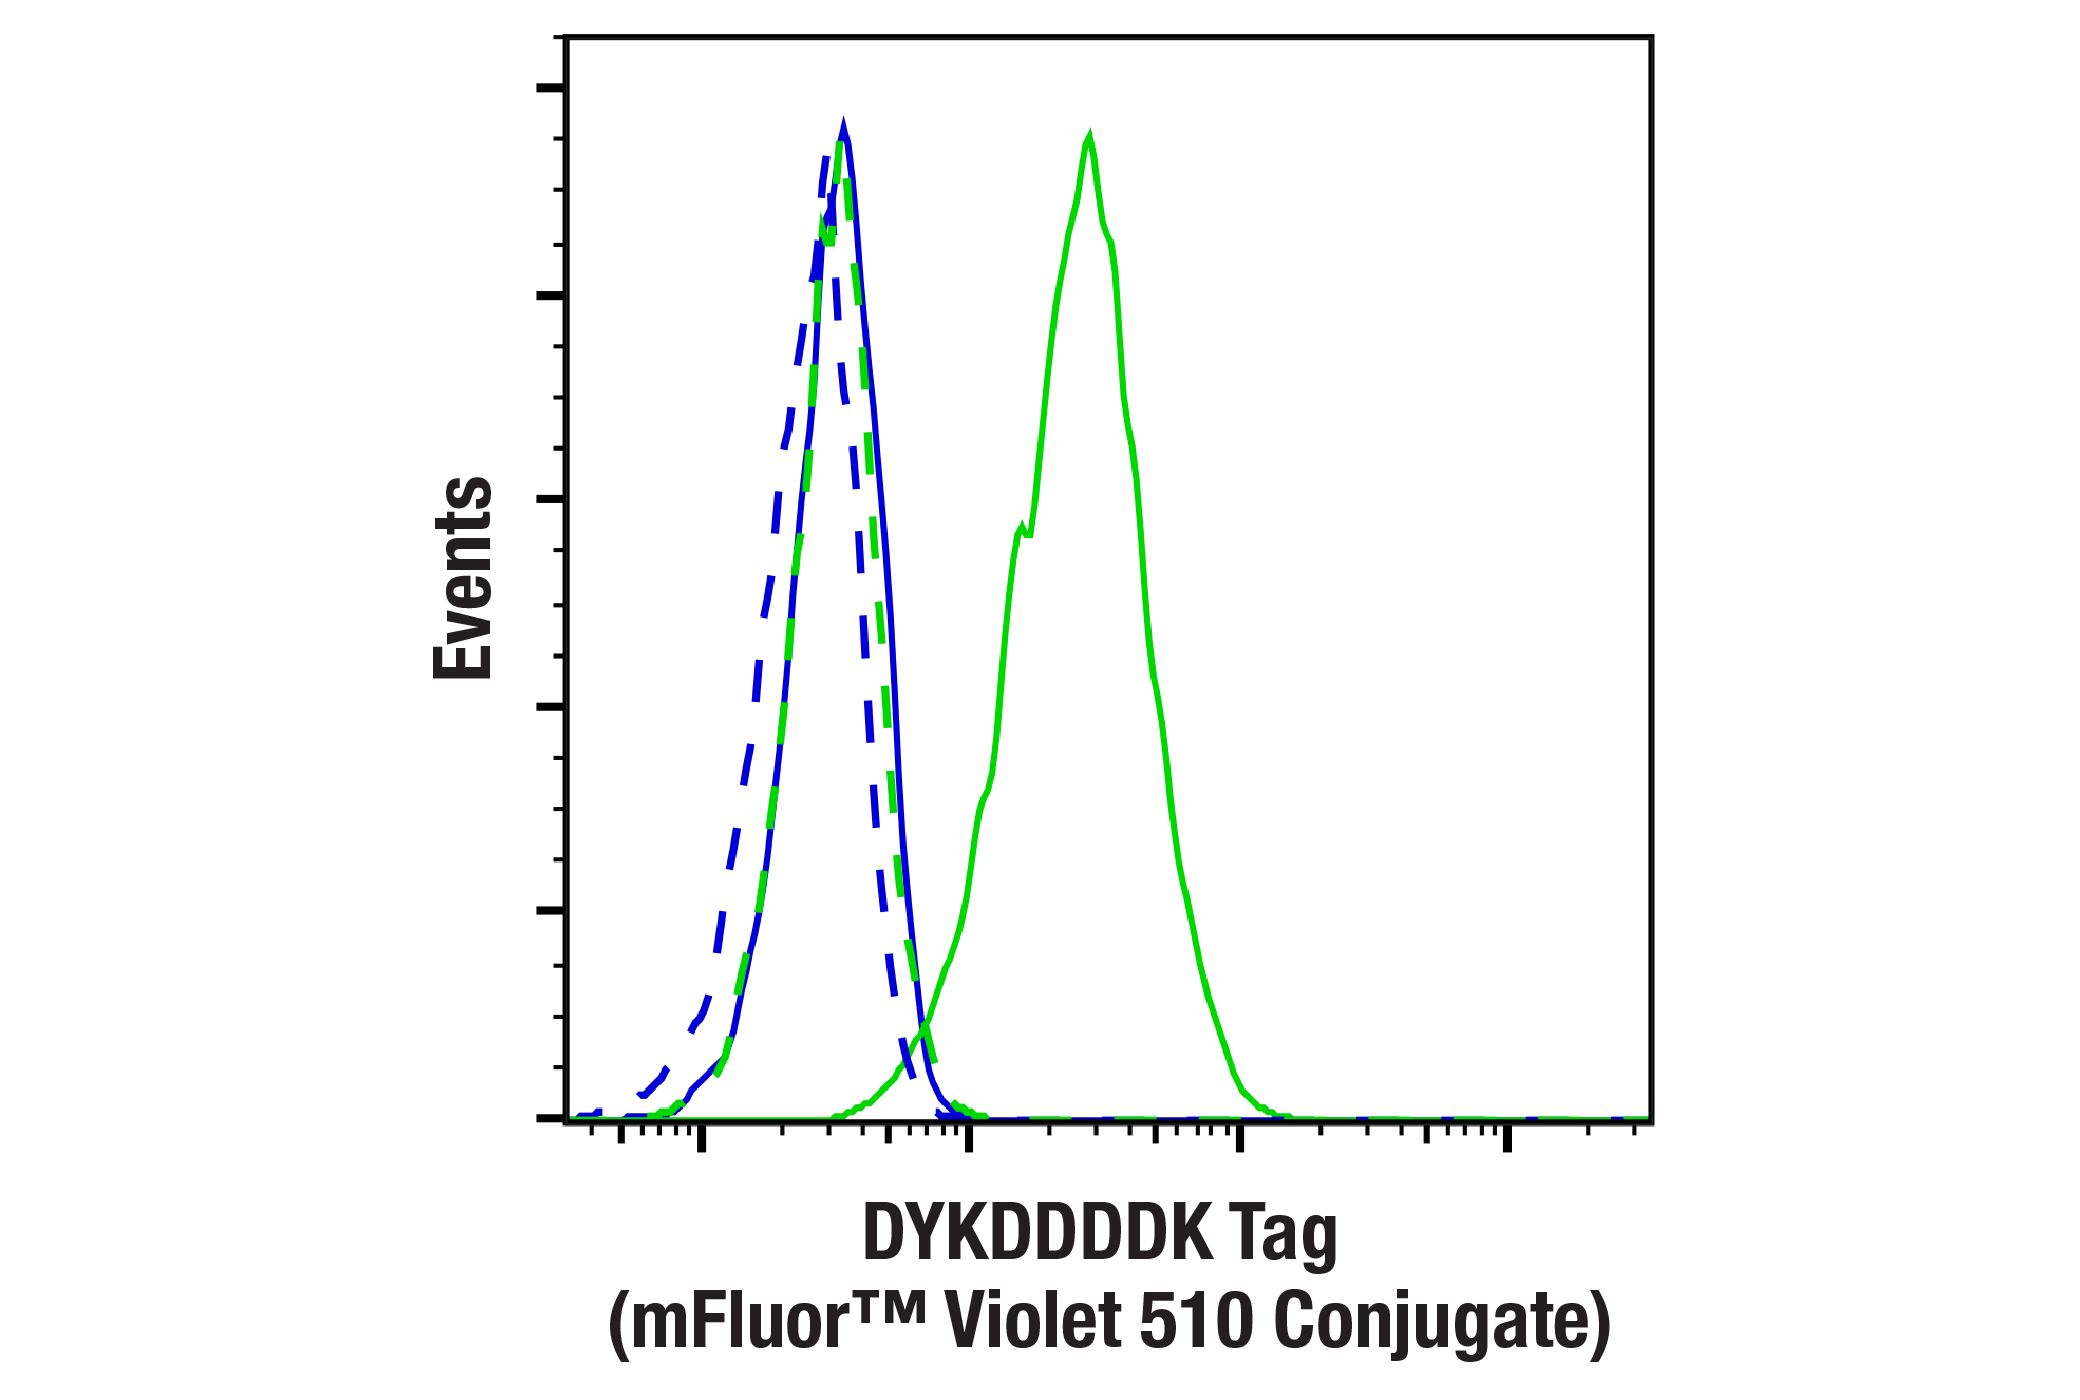 Flow Cytometry Image 1: DYKDDDDK Tag (D6W5B) Rabbit mAb (Binds to same epitope as Sigma-Aldrich Anti-FLAG M2 antibody) (mFluor™ Violet 510 Conjugate)